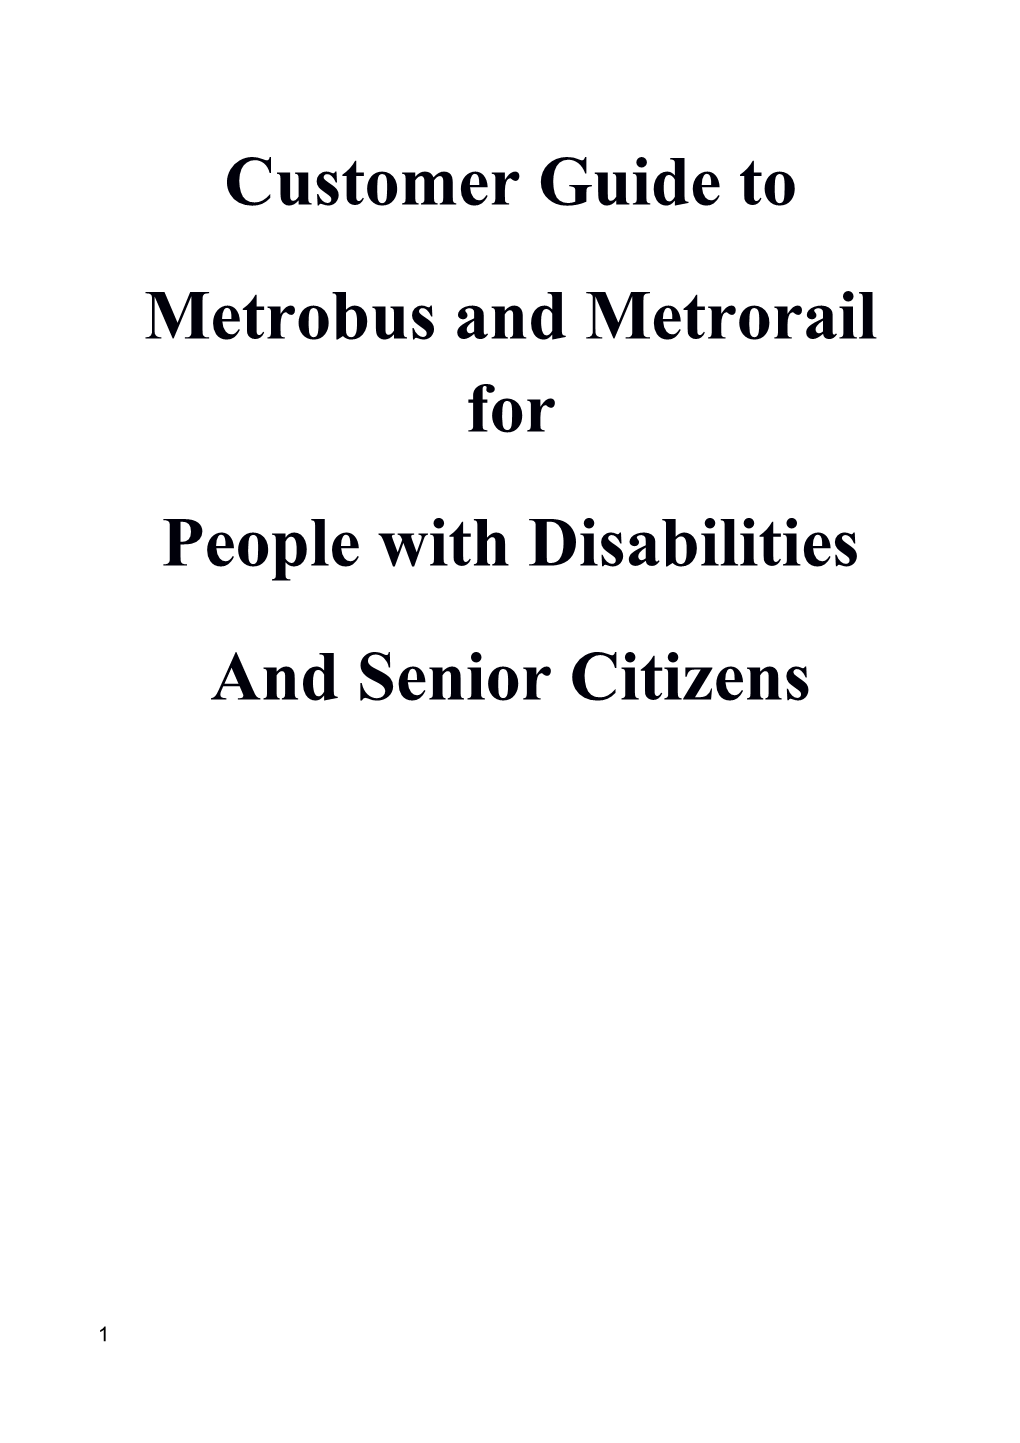 Metrobus and Metrorail For